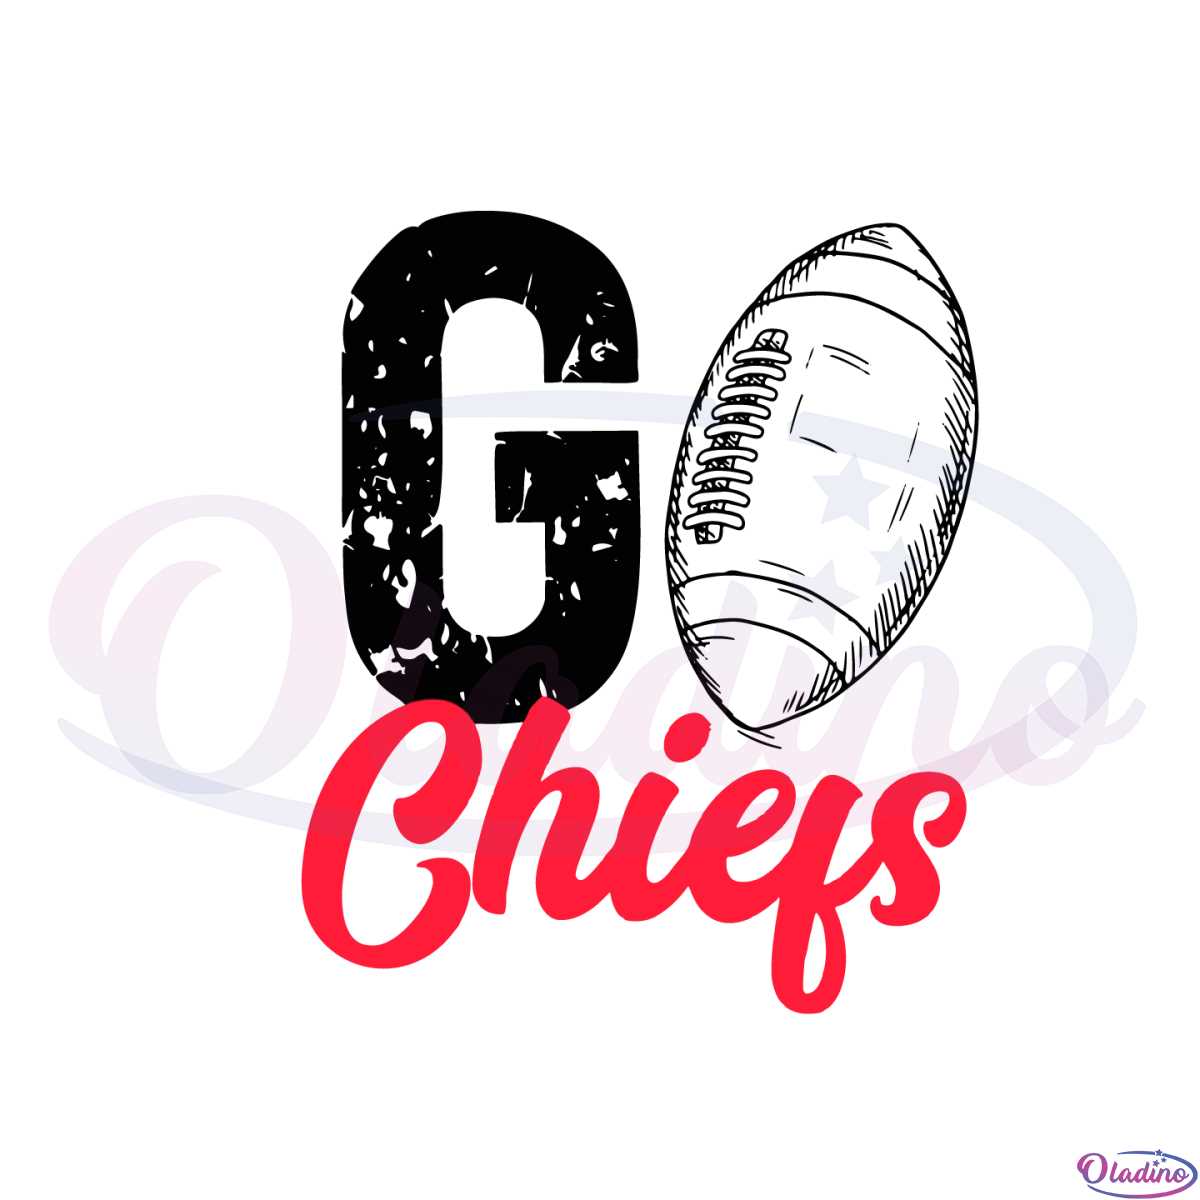 go chiefs